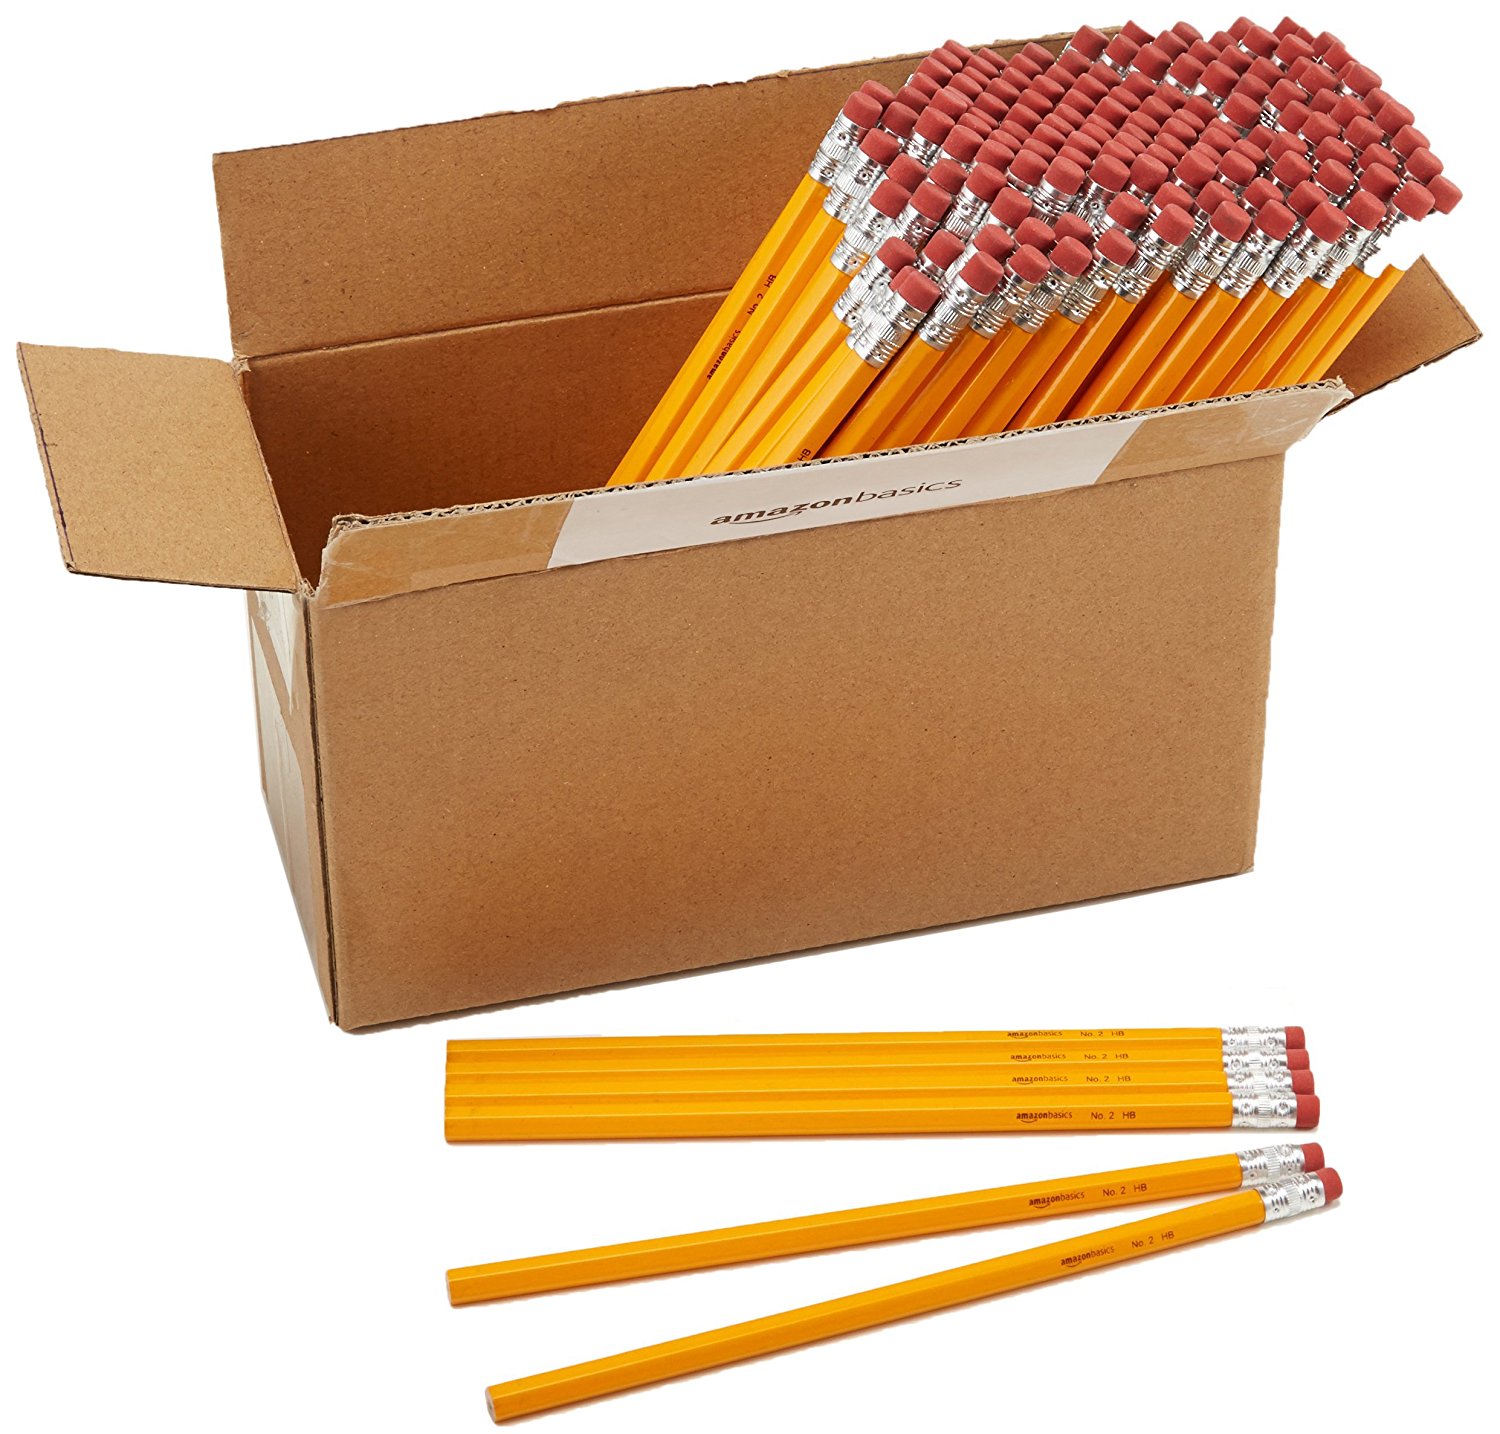 AmazonBasics Wood-cased HB Pencils - Box of 144